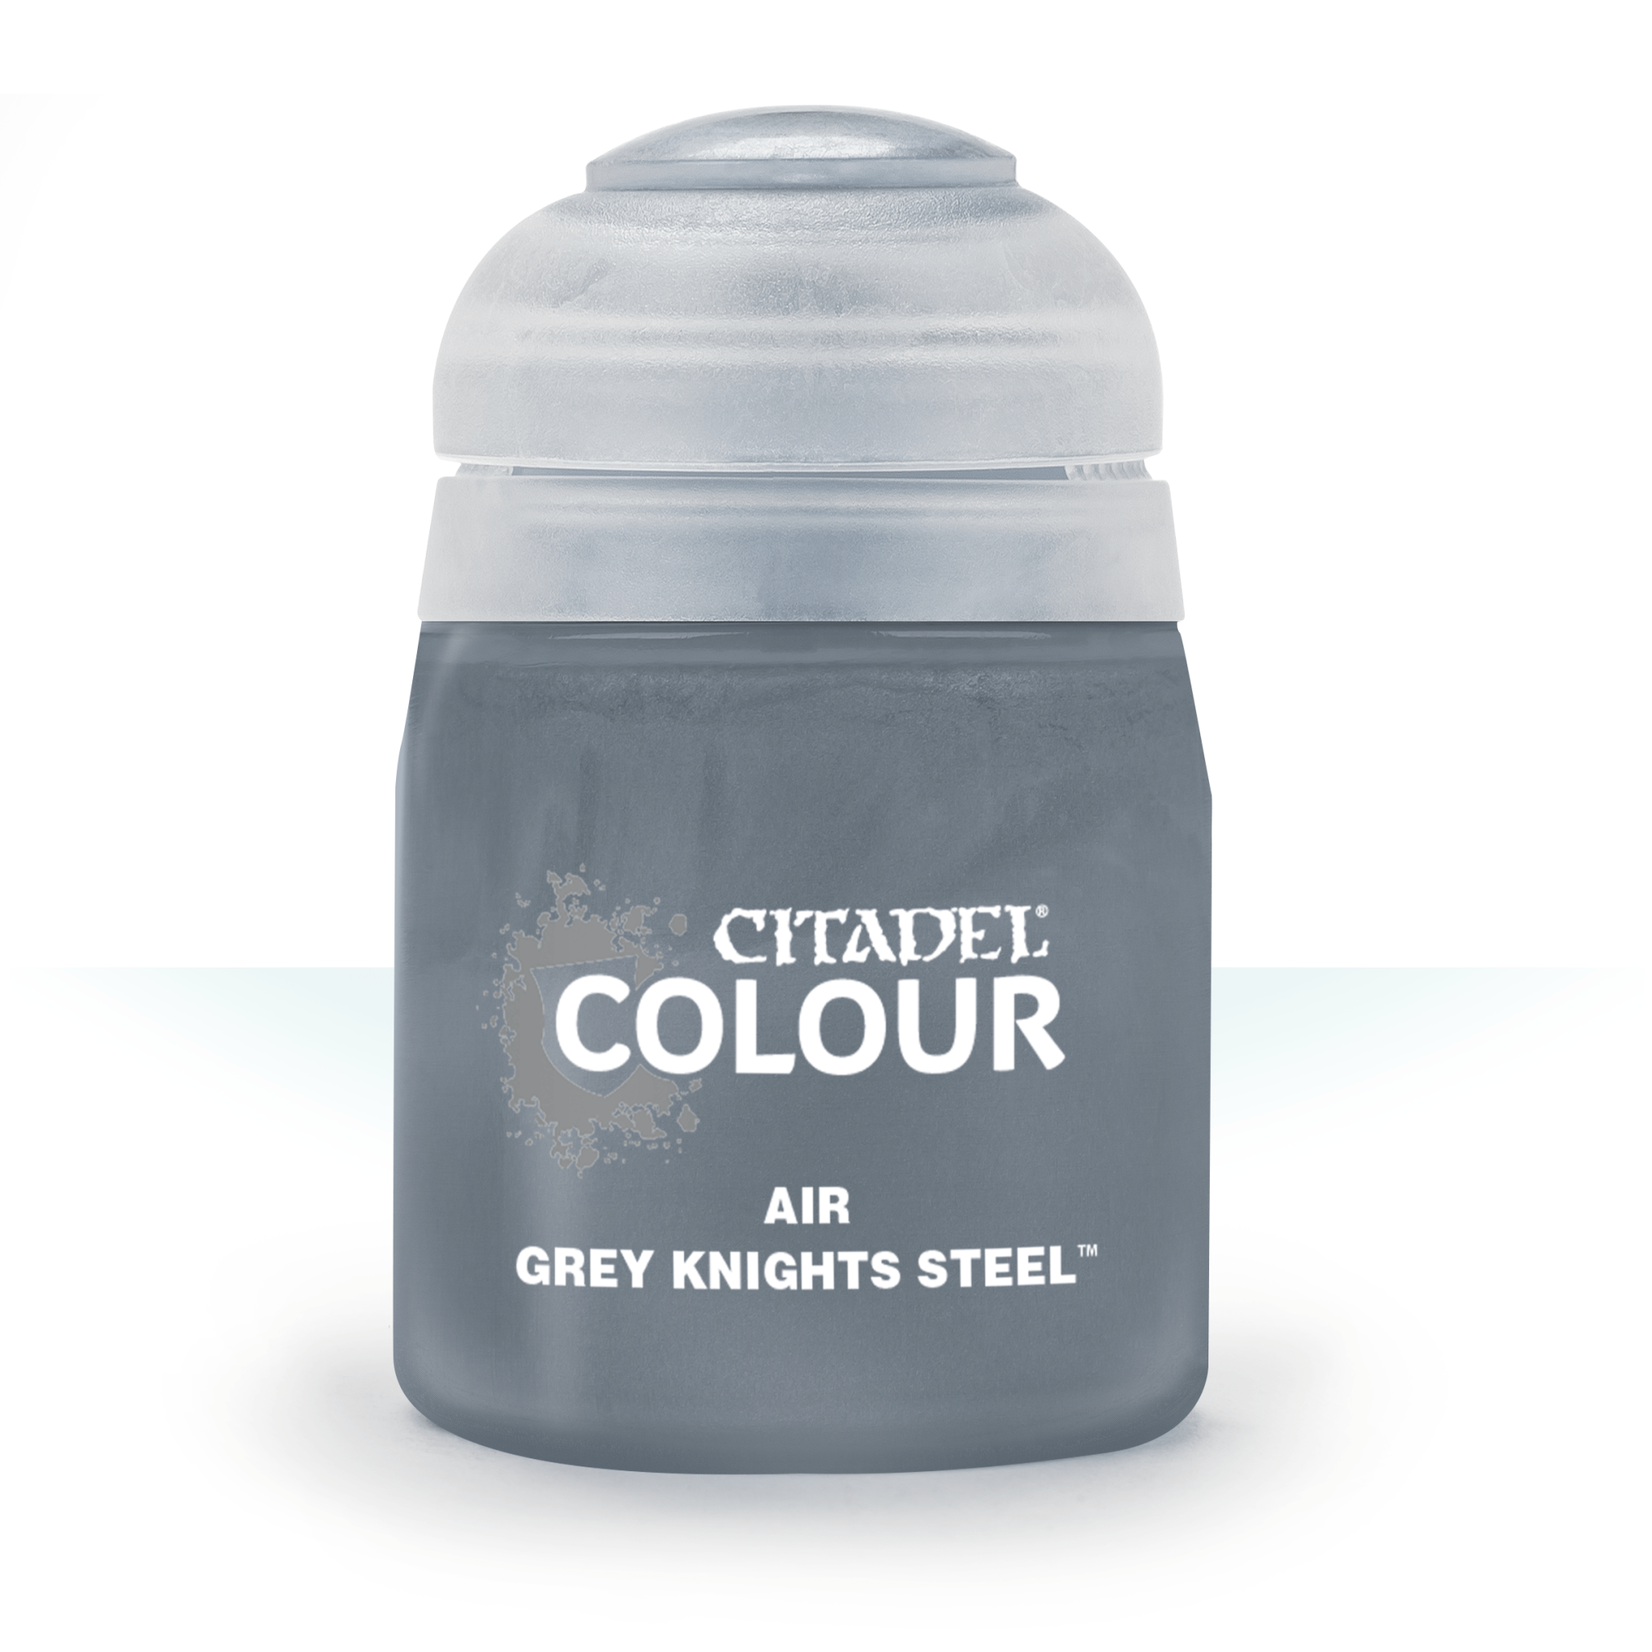 Citadel Air Grey Knights Steel 24ml pot Air